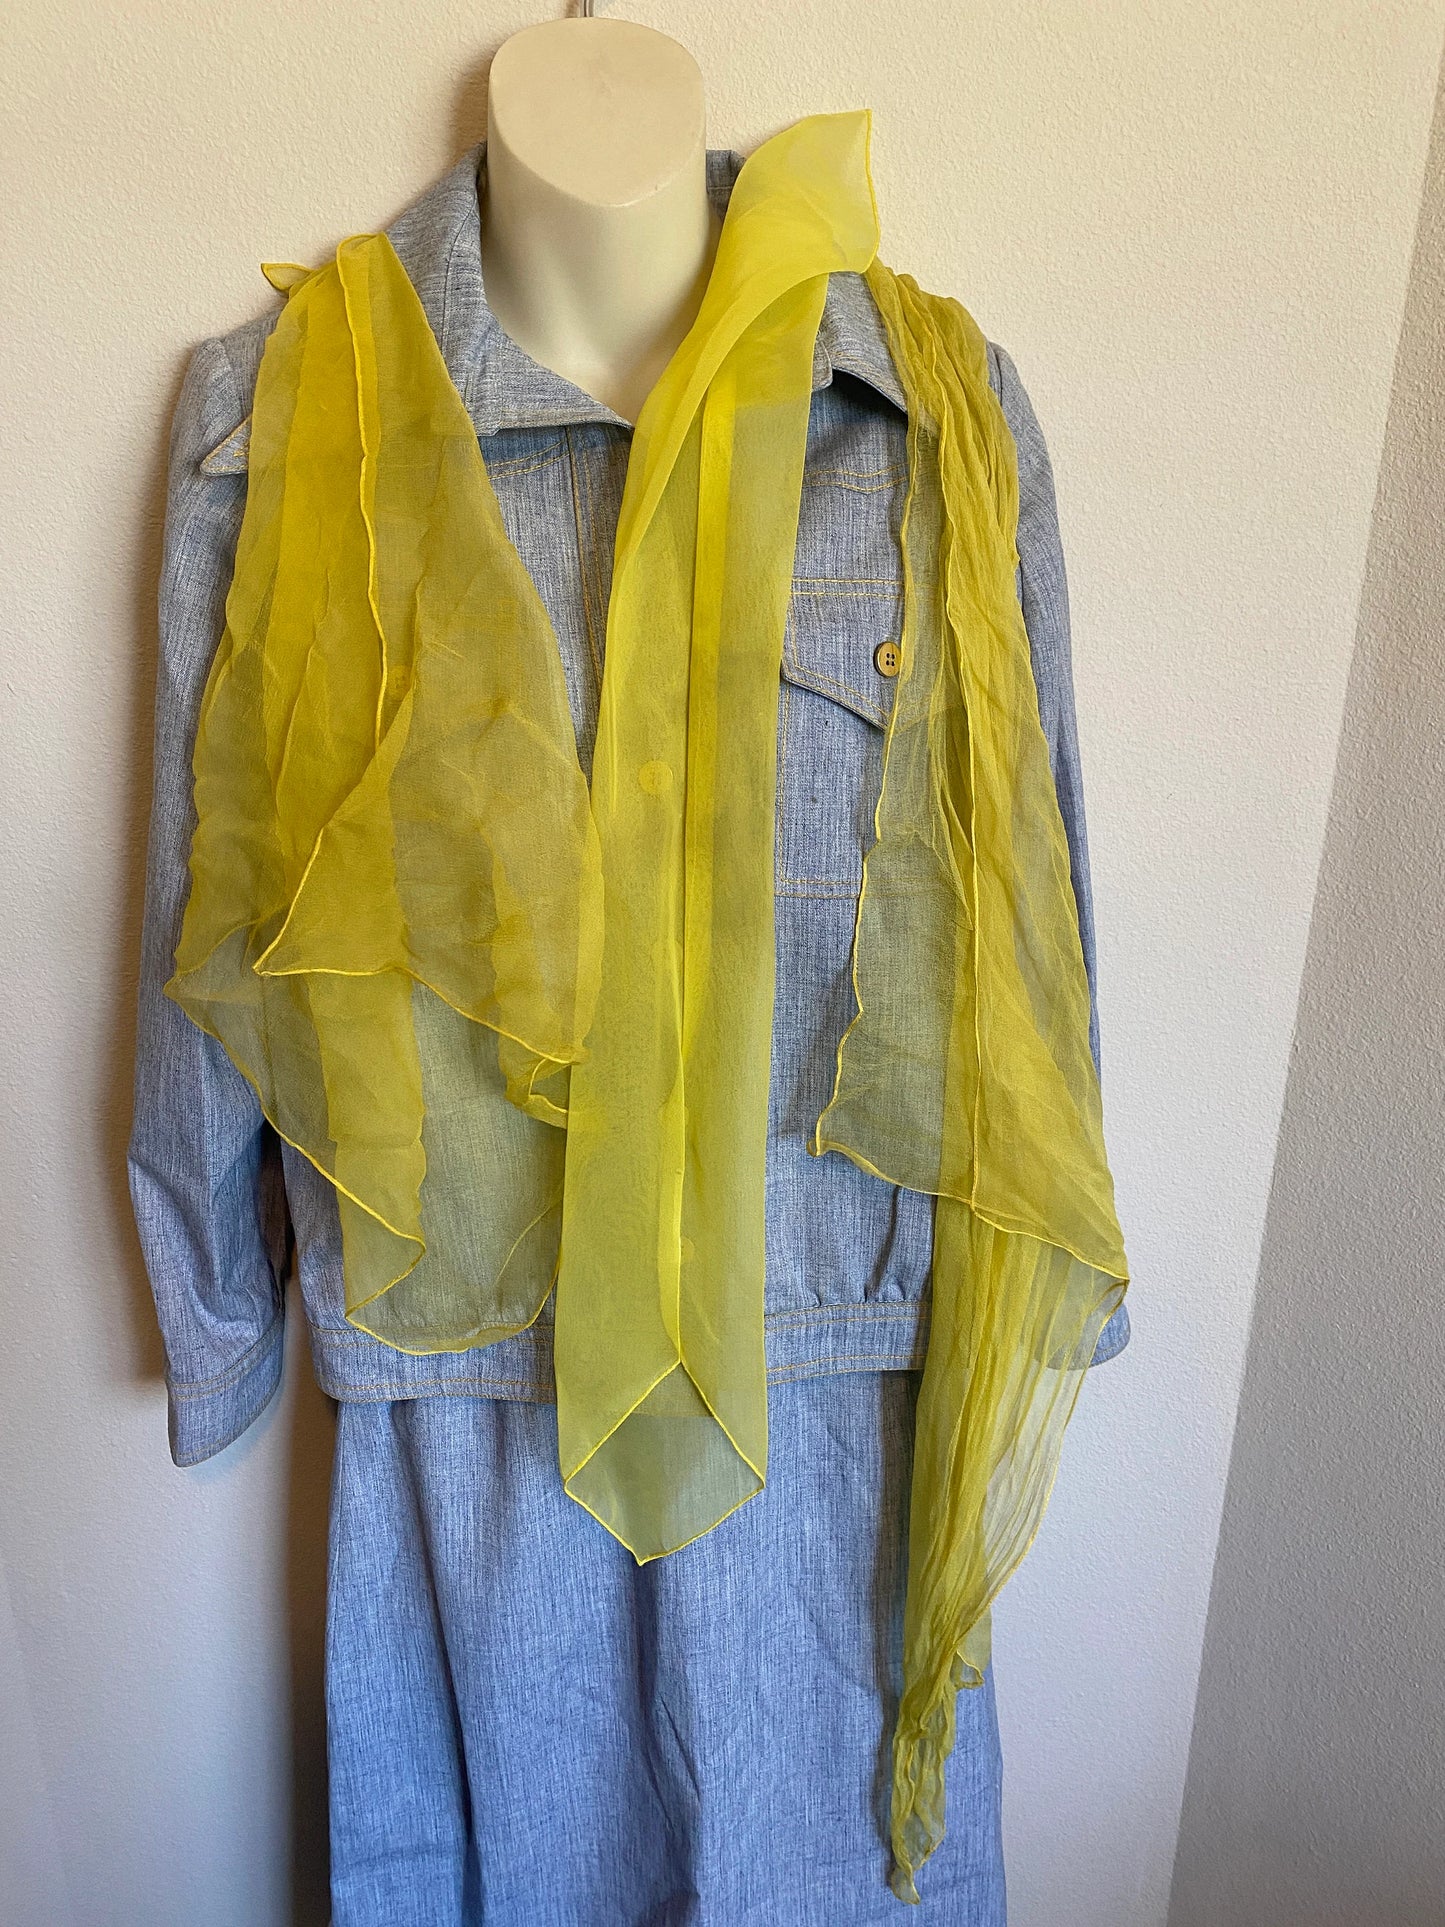 Vintage Women's Yellow Blouse, Yellow Scarf, Denim Jacket, Denim Skirt